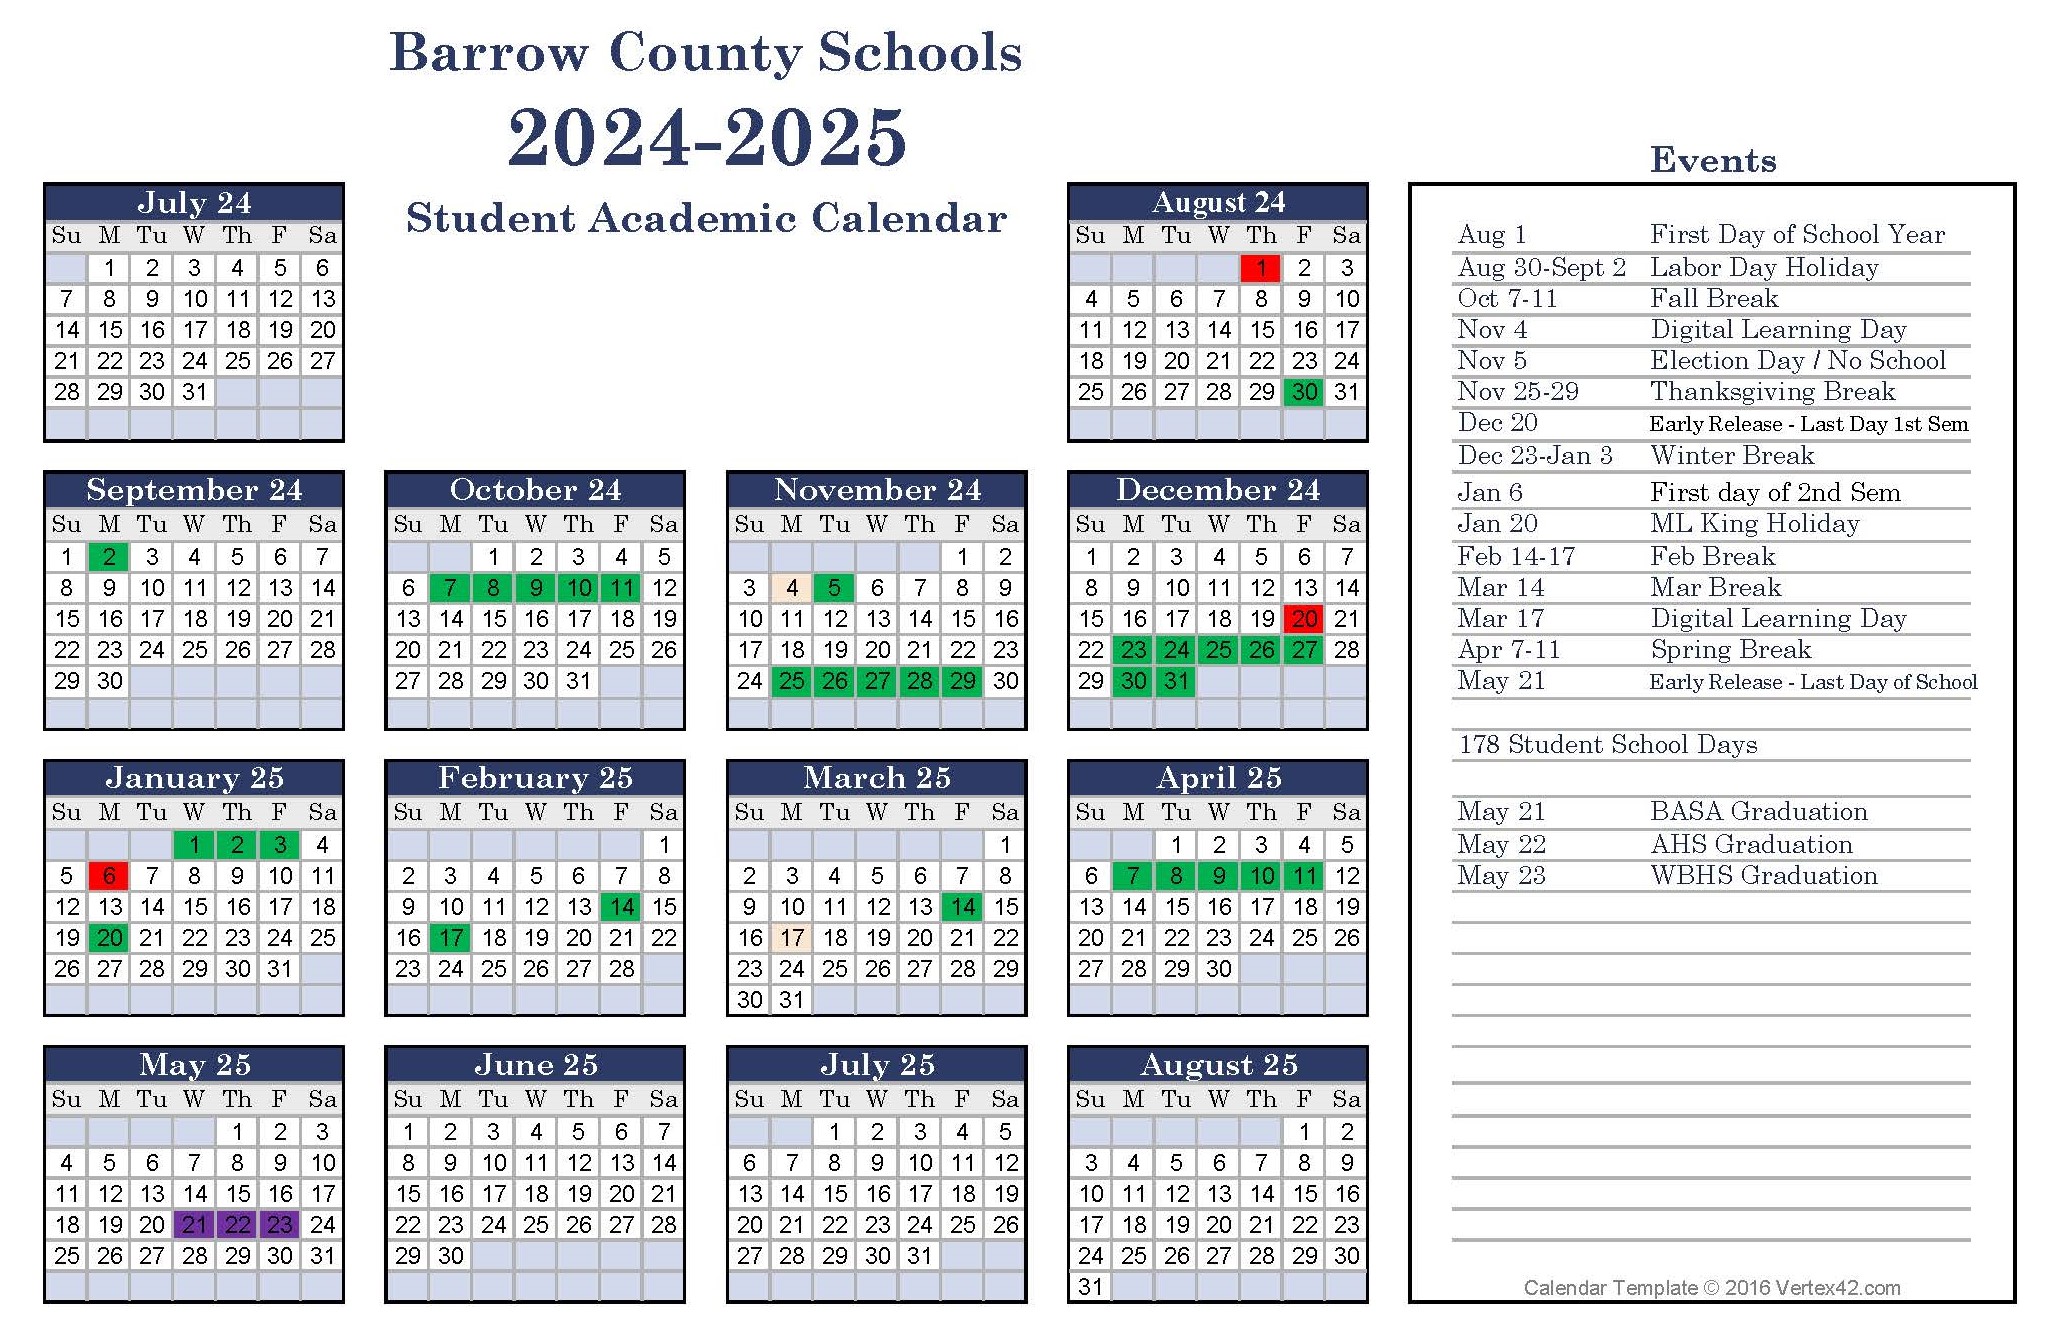 bucks-county-technical-high-school-calendar-2024-2025-celka-darlene